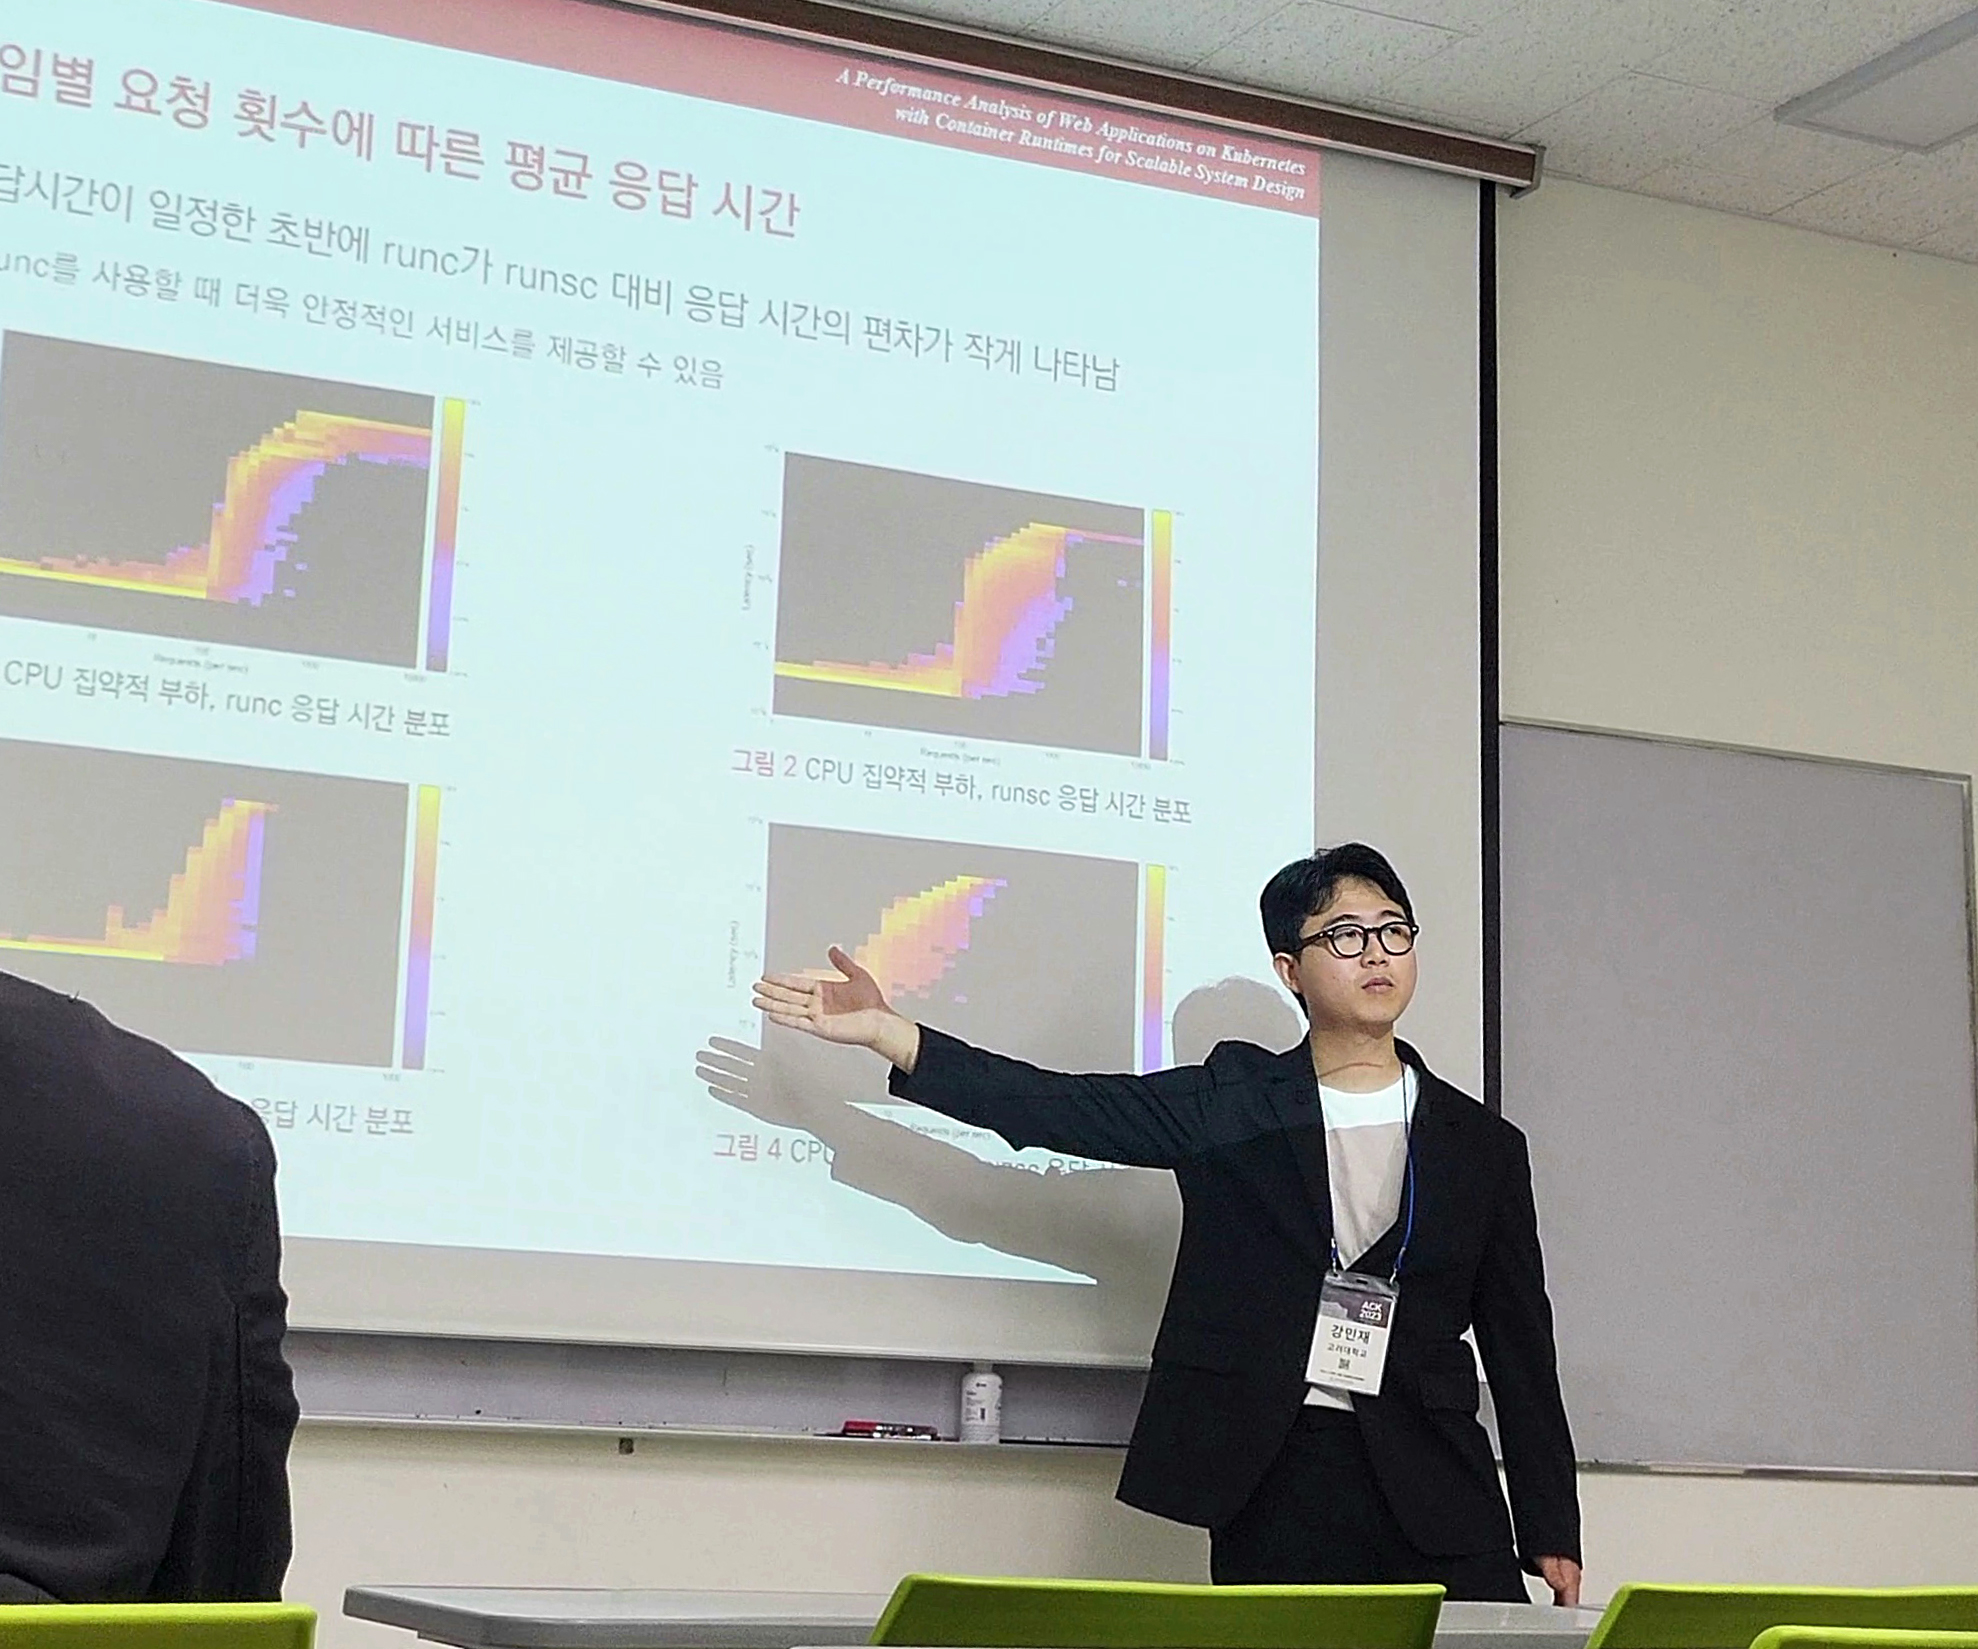 Minjae Kang (Undergraduate student) is presenting his paper.